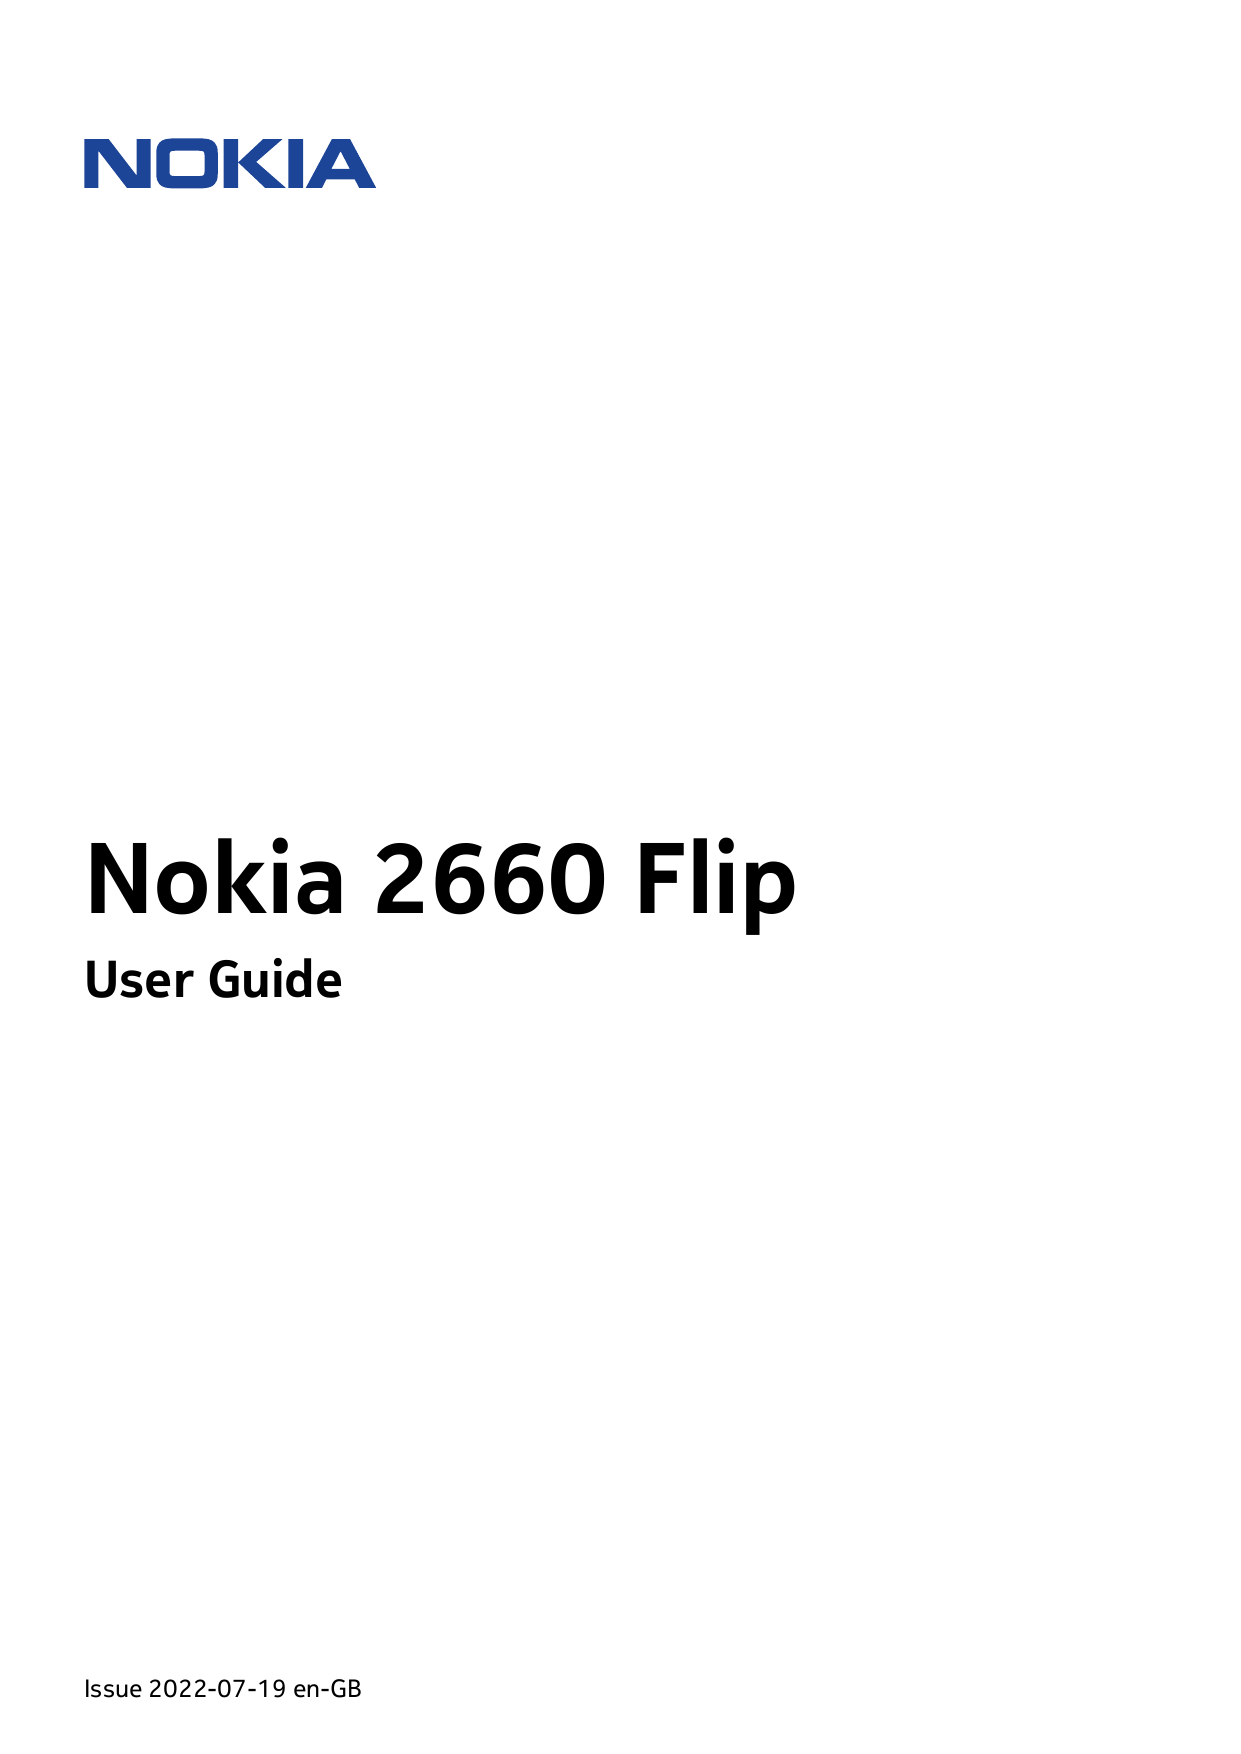 Nokia 2660 FlipUser GuideIssue 2022-07-19 en-GB